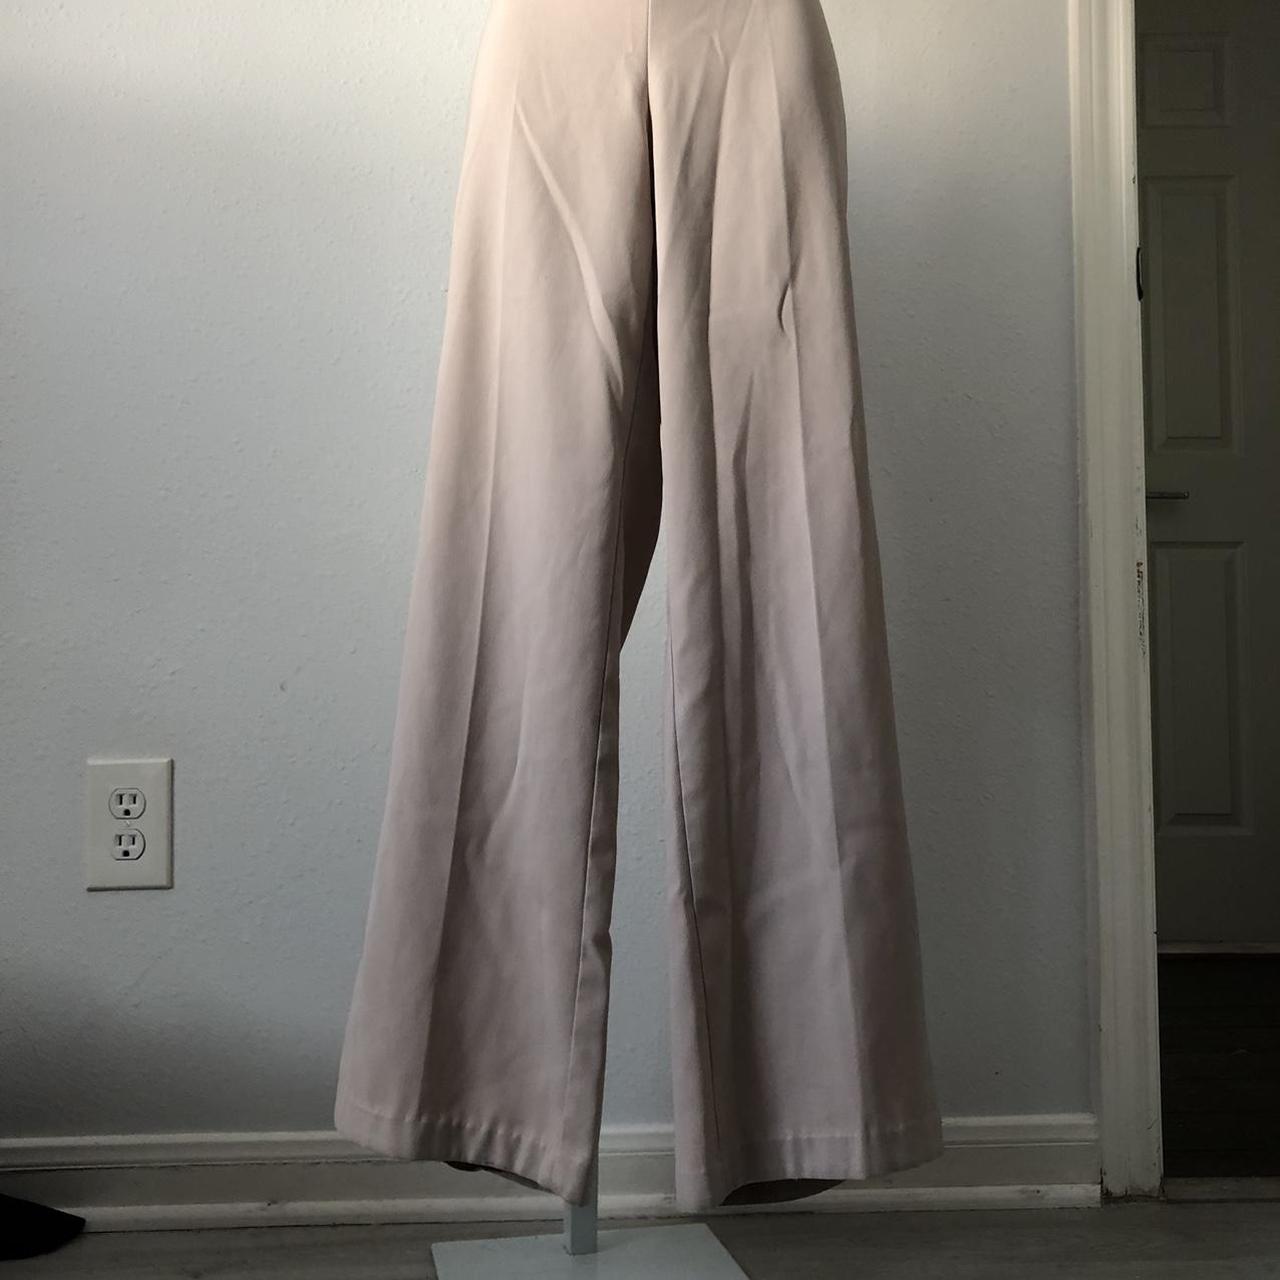 Product Image 1 - Khaki Flared Dress Pant

This high